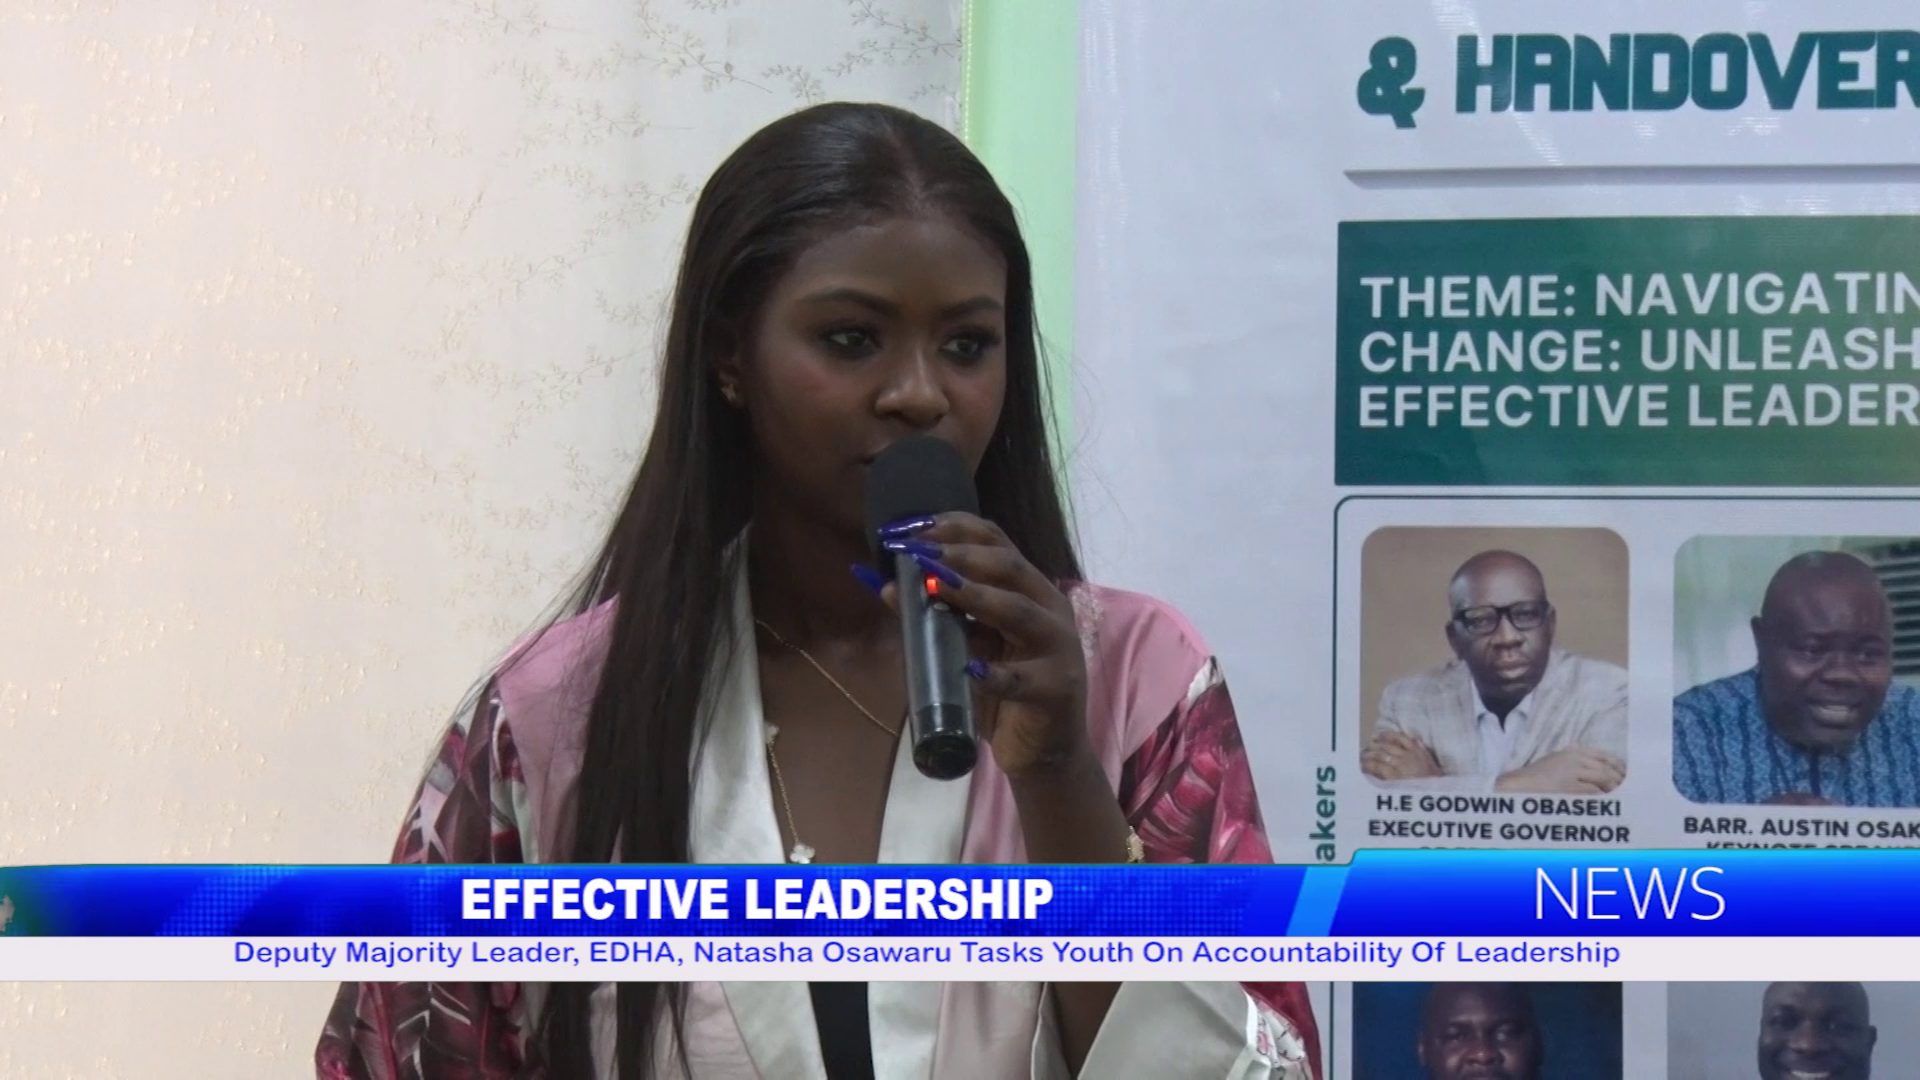 Deputy Majority Leader, EDHA, Natasha Osawaru Tasks Youth On Accountability Of Leadership